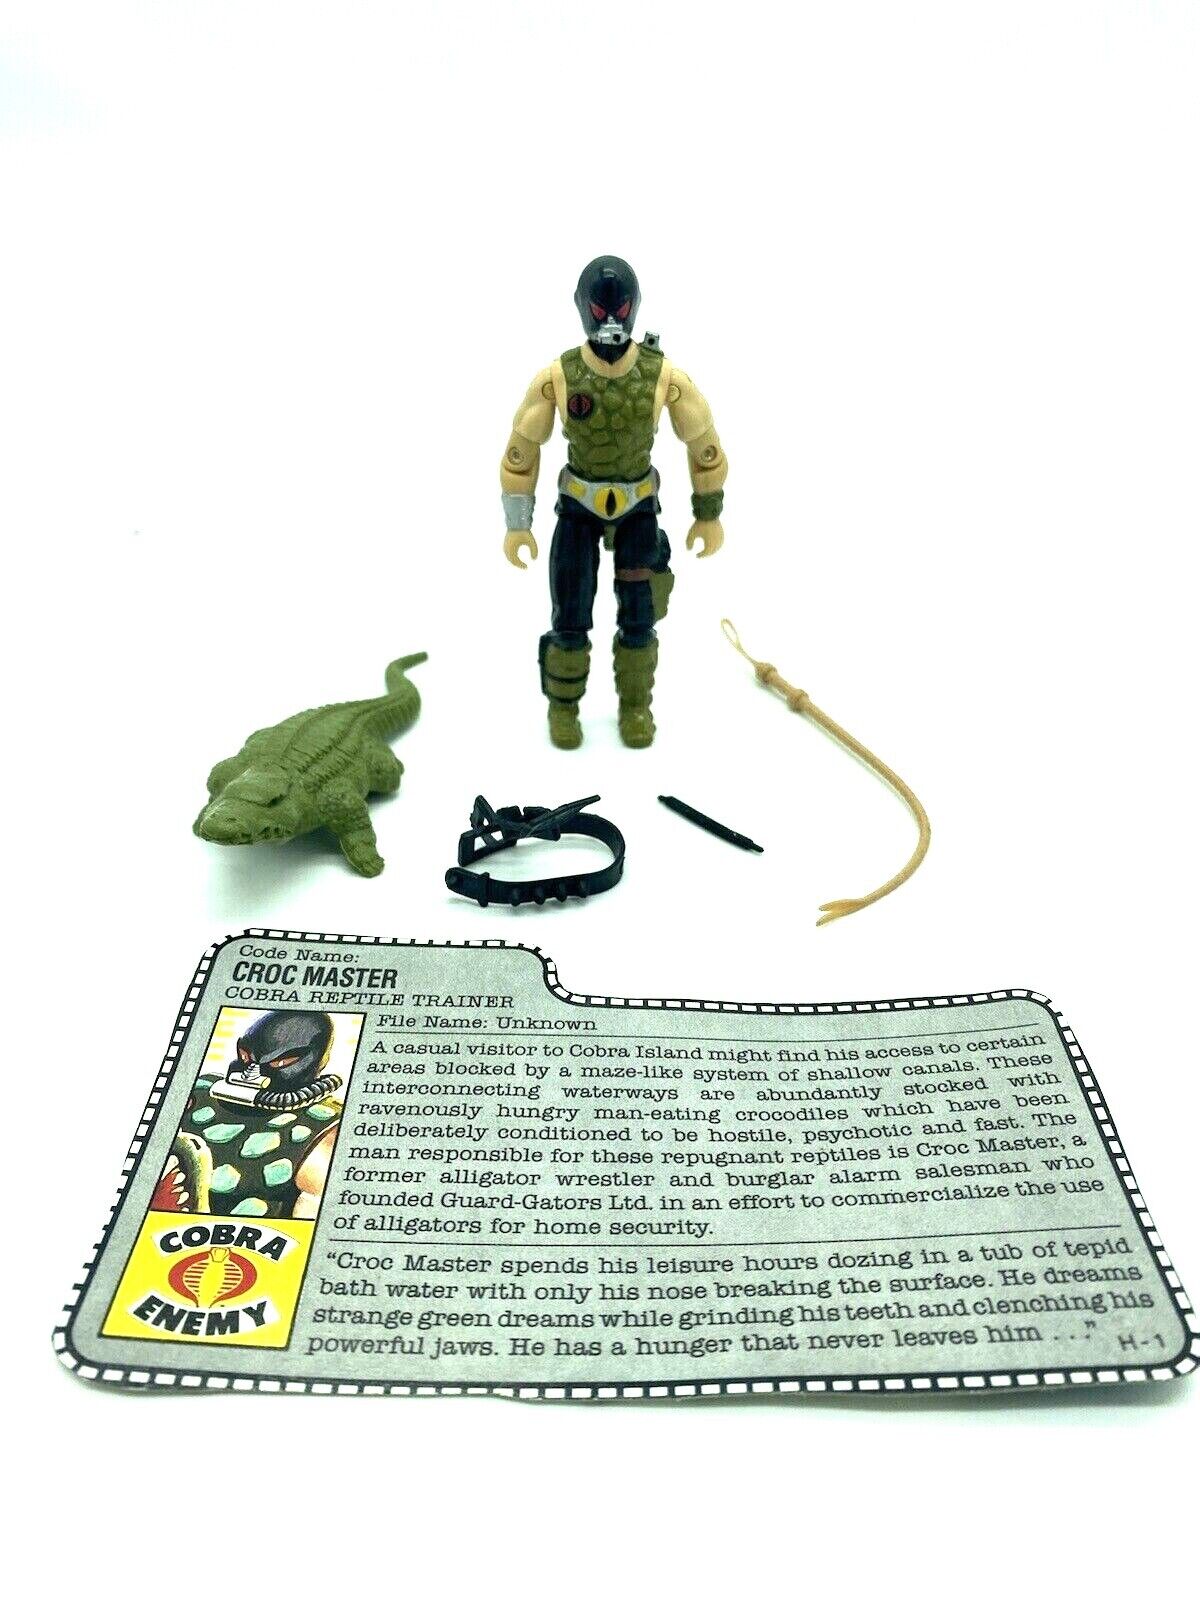 G.I. Joe Croc Master complete Cobra figure with file card